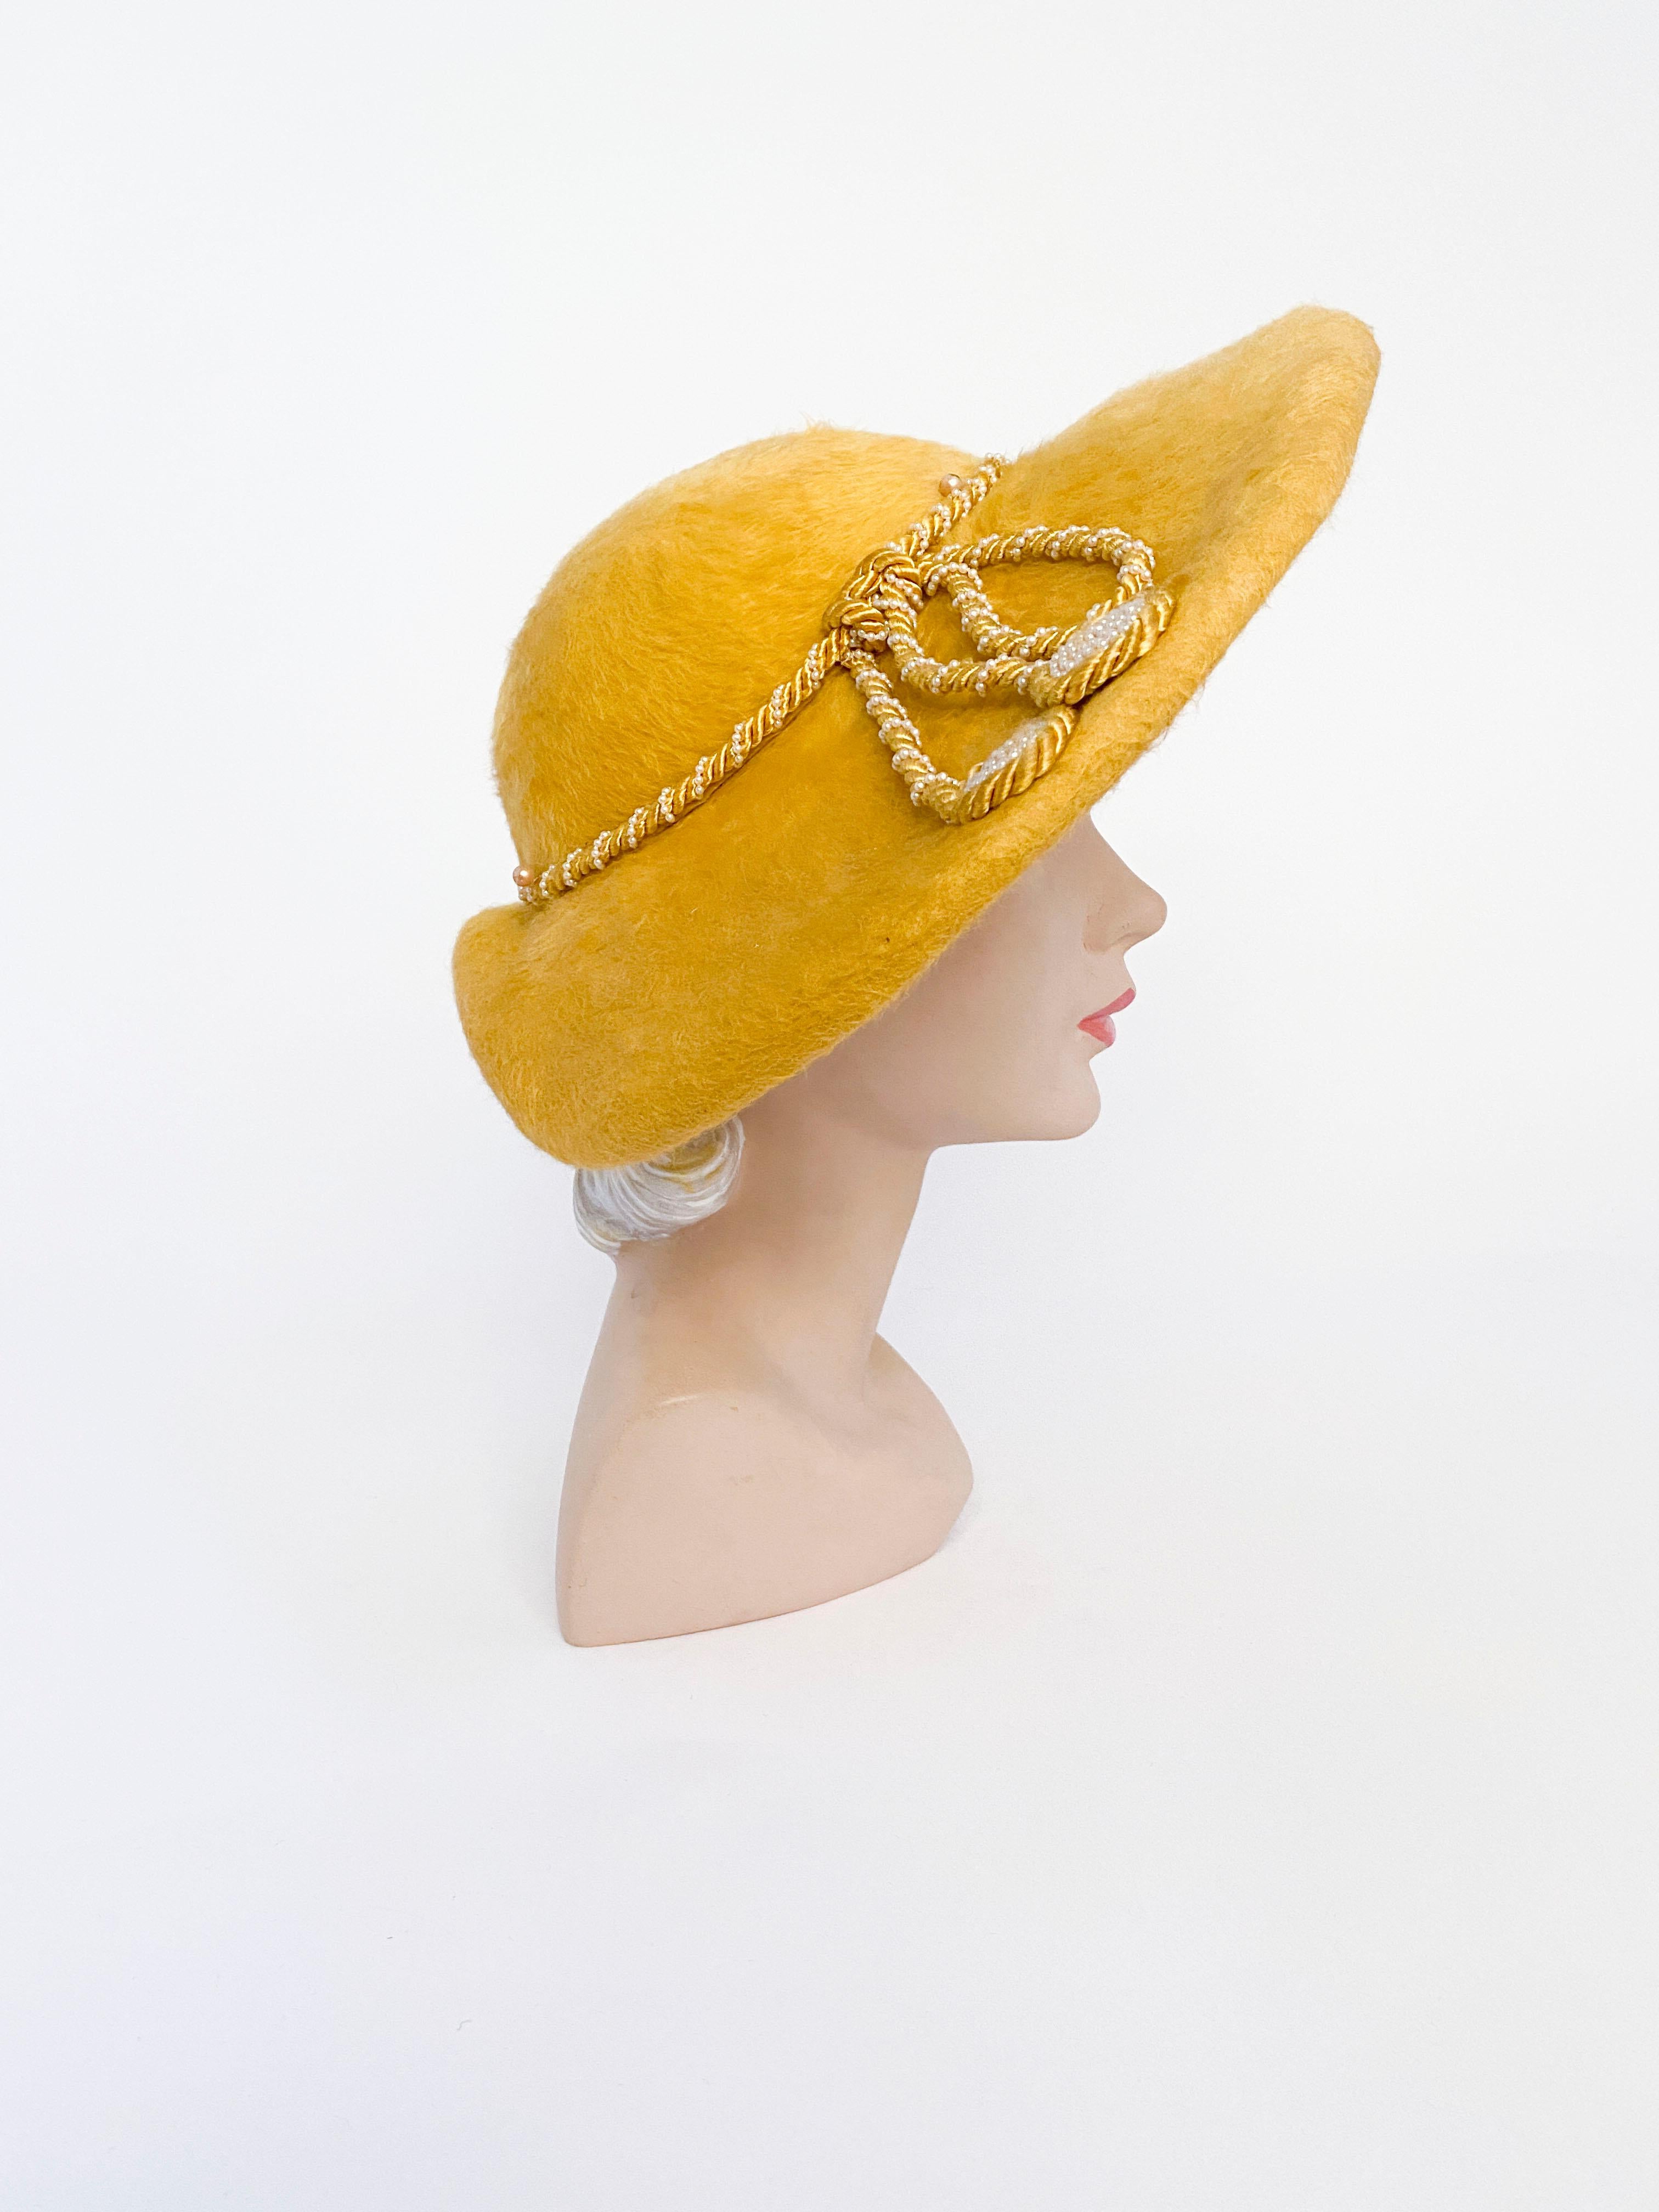 yellow felt hat